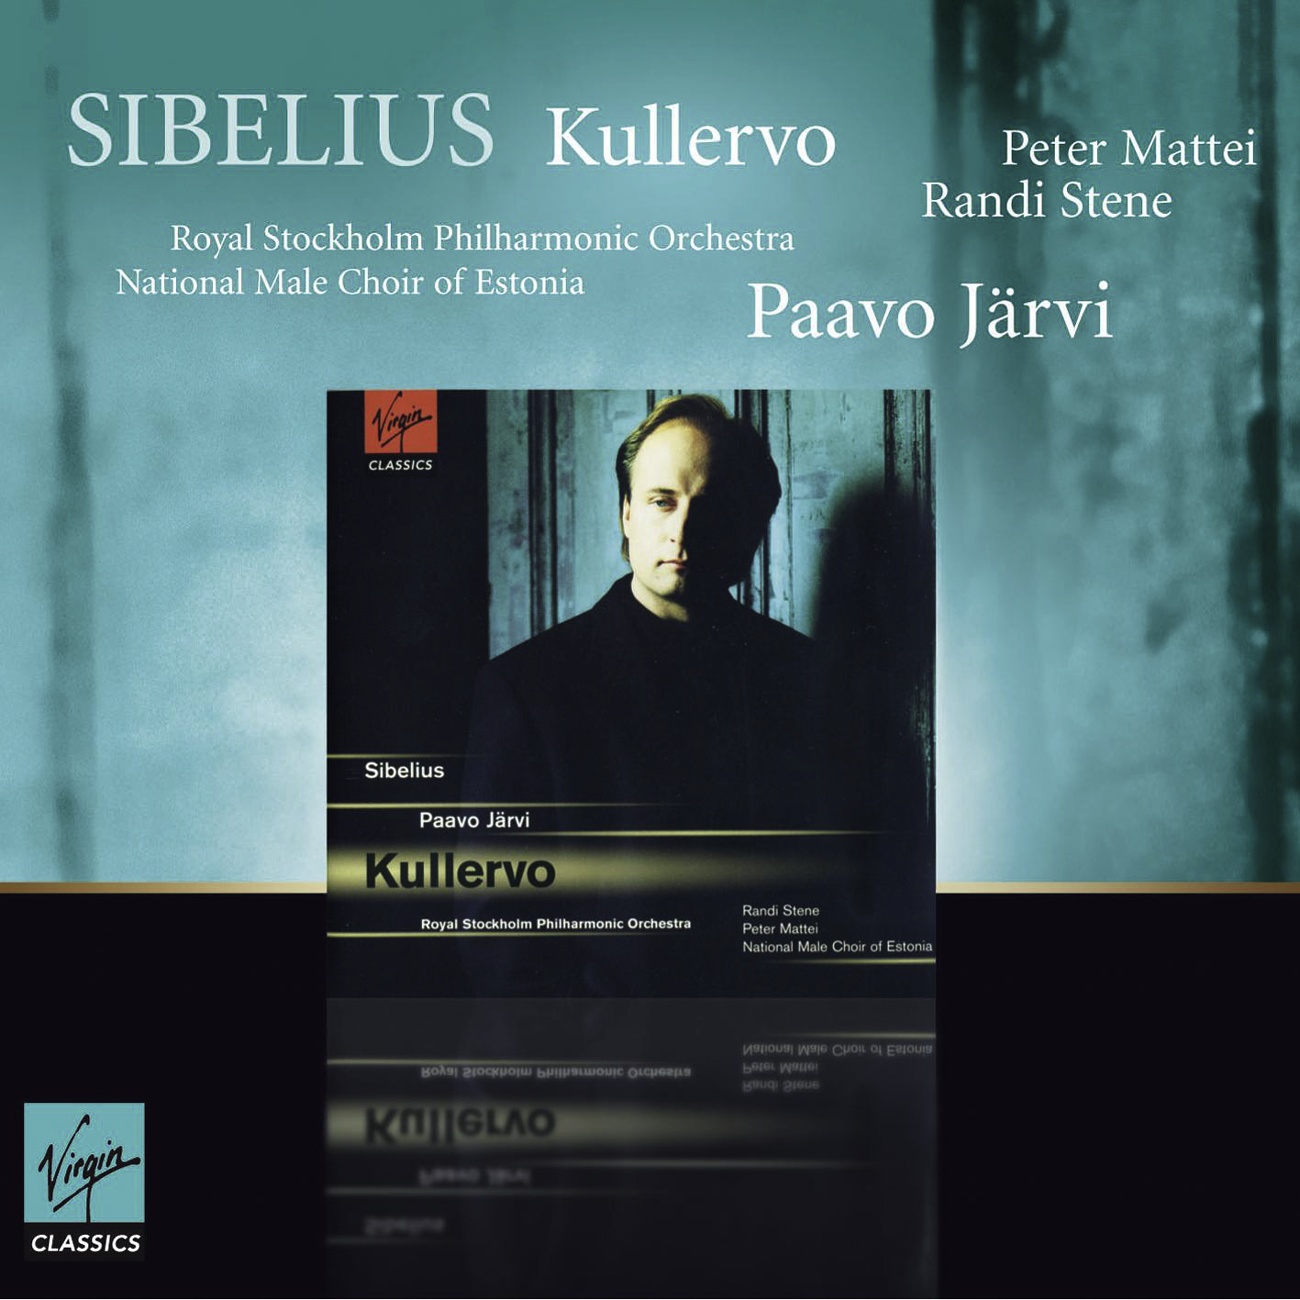 Kullervo - Symphonisches Gedicht, Op. 7, fur Soli, Chor und Orchester (Kalevala): IV - Kullervo tagar ut till strid (Kullervo goes to War) - Alla marcia